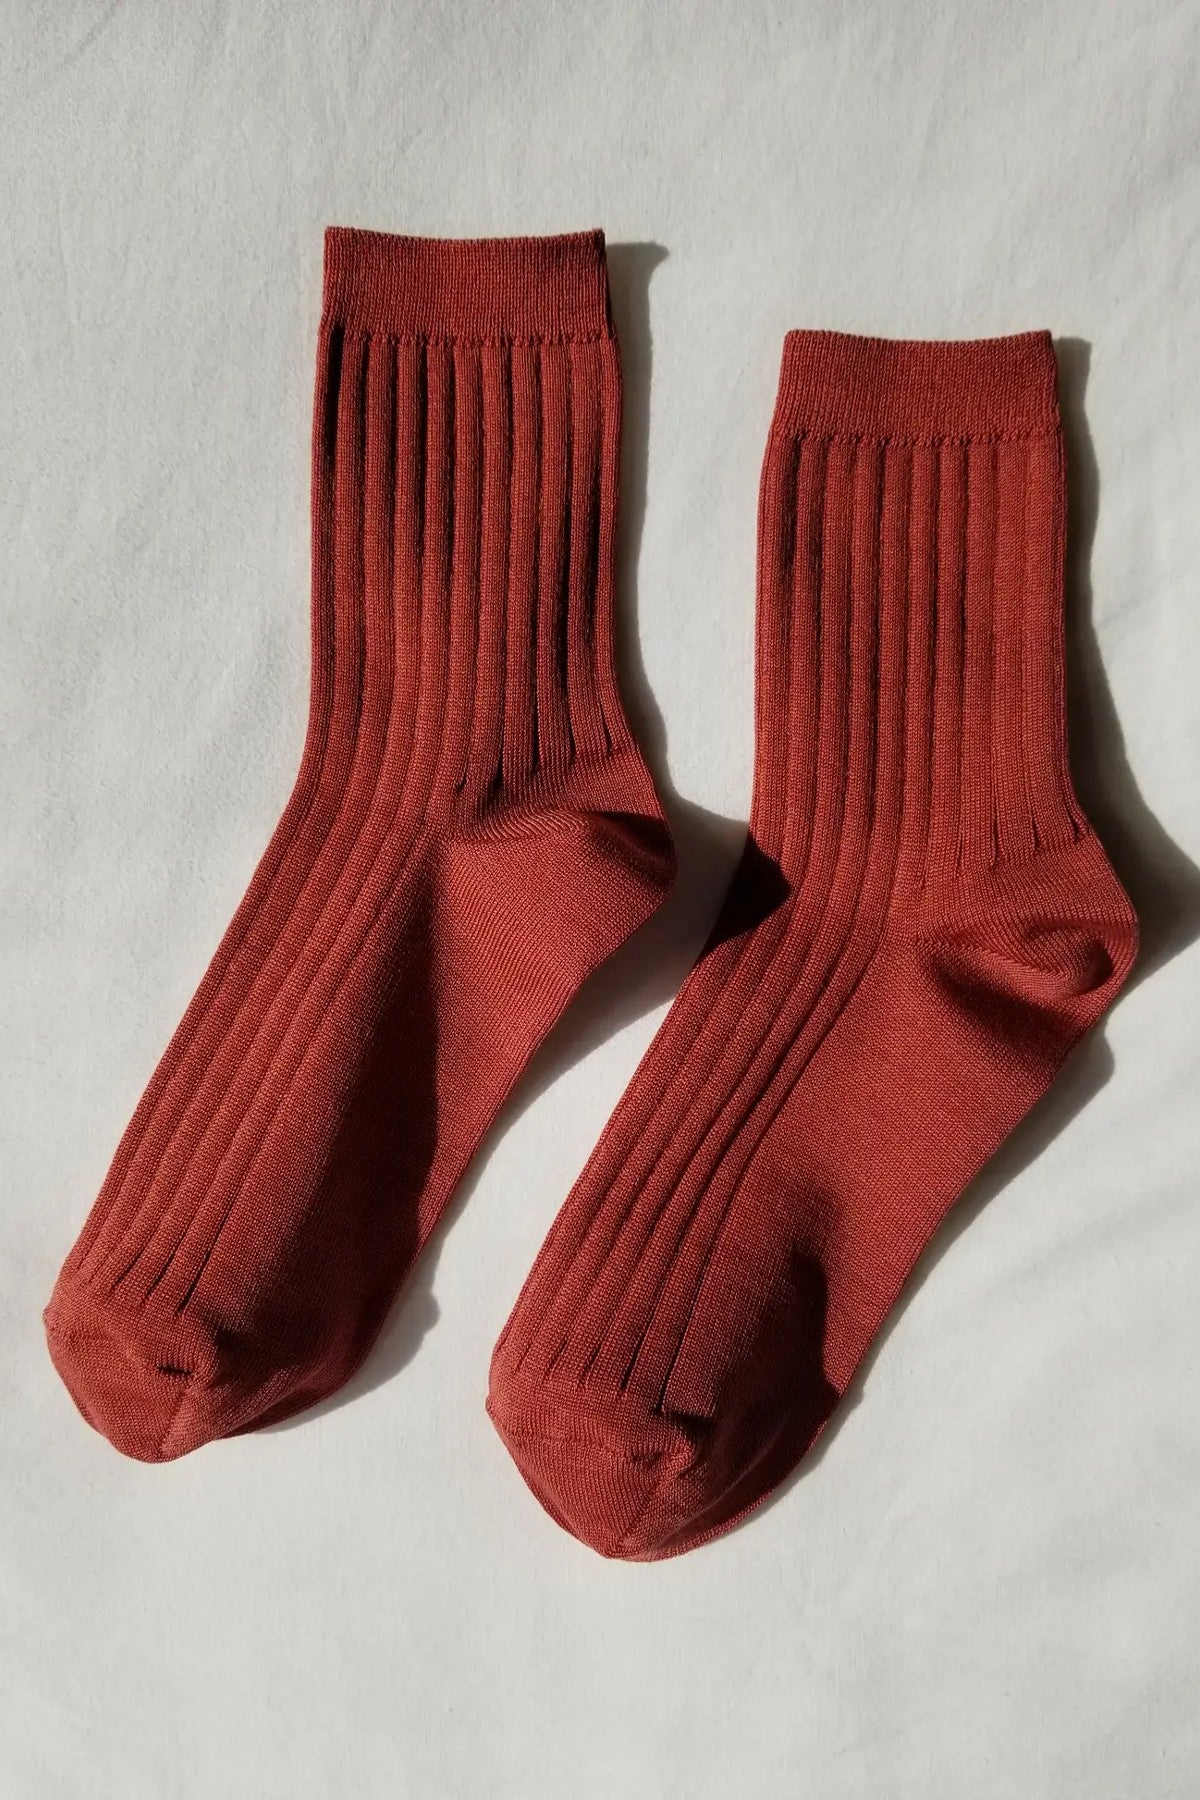 LE BON SHOPPE HER COTTON SOCKS - Women's Slow Fashion Accessories - Ribbed Mercerized Cotton Trouser Socks in "Terracotta" Red